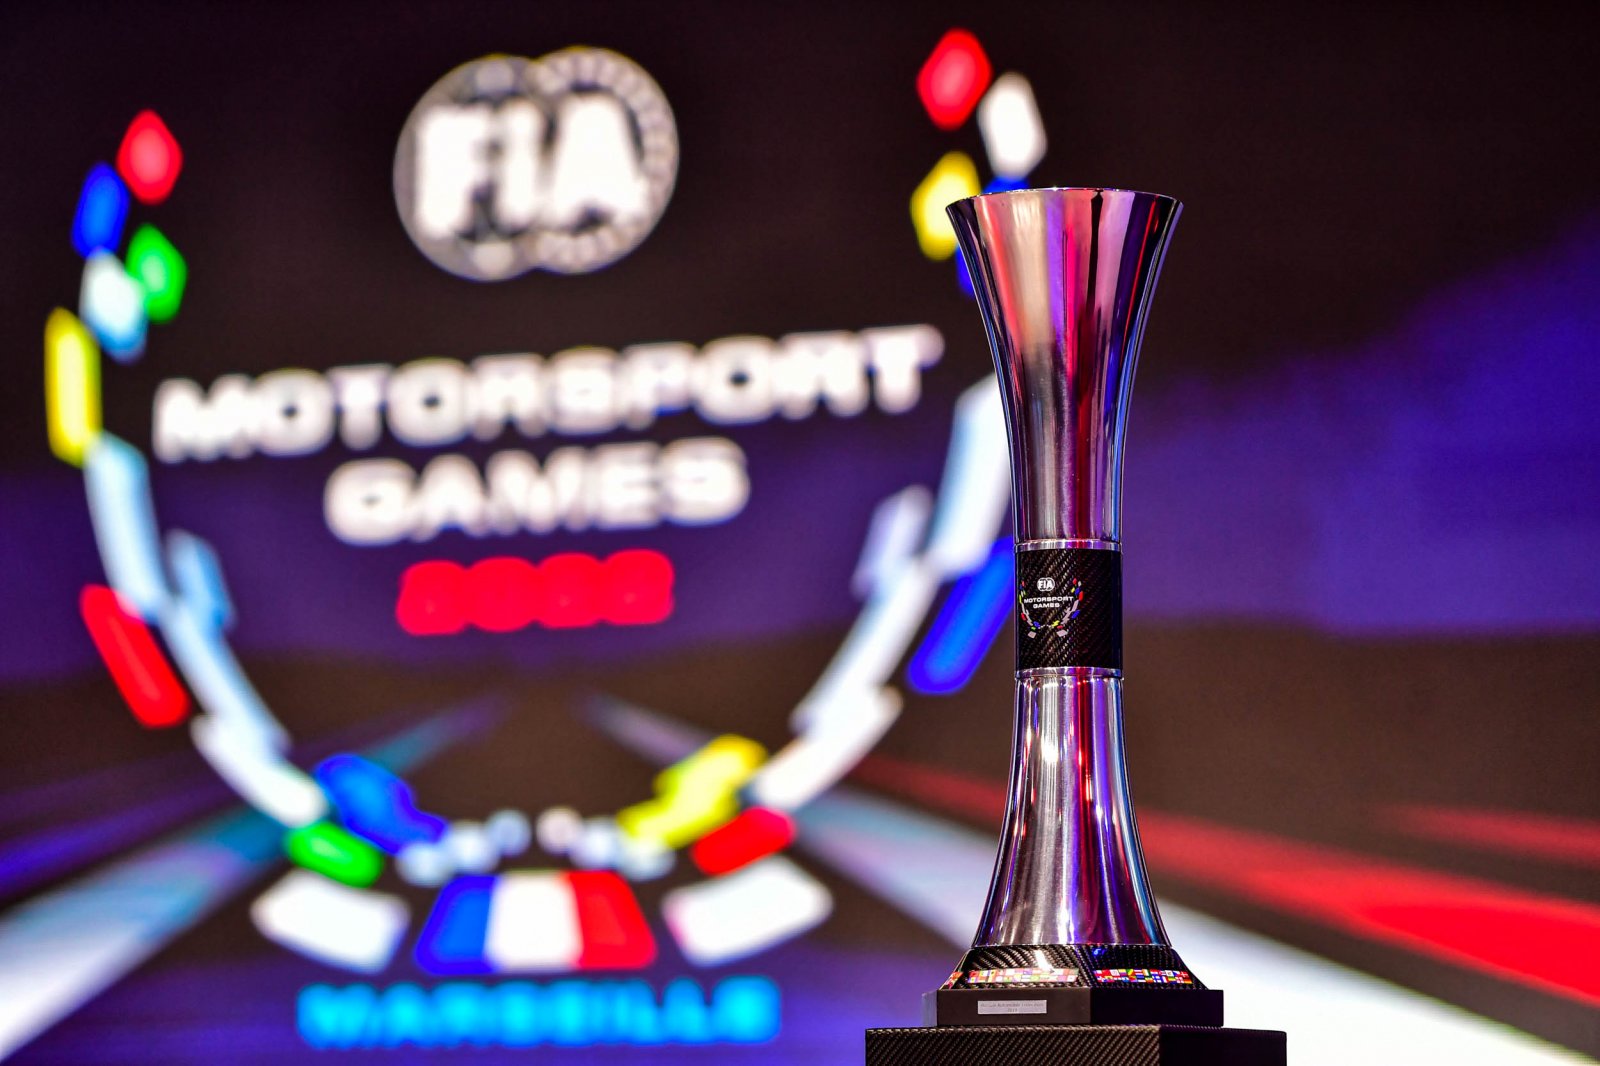 FIA Motorsport Games 2022 wins “Best Live Event” at The Race Media Awards